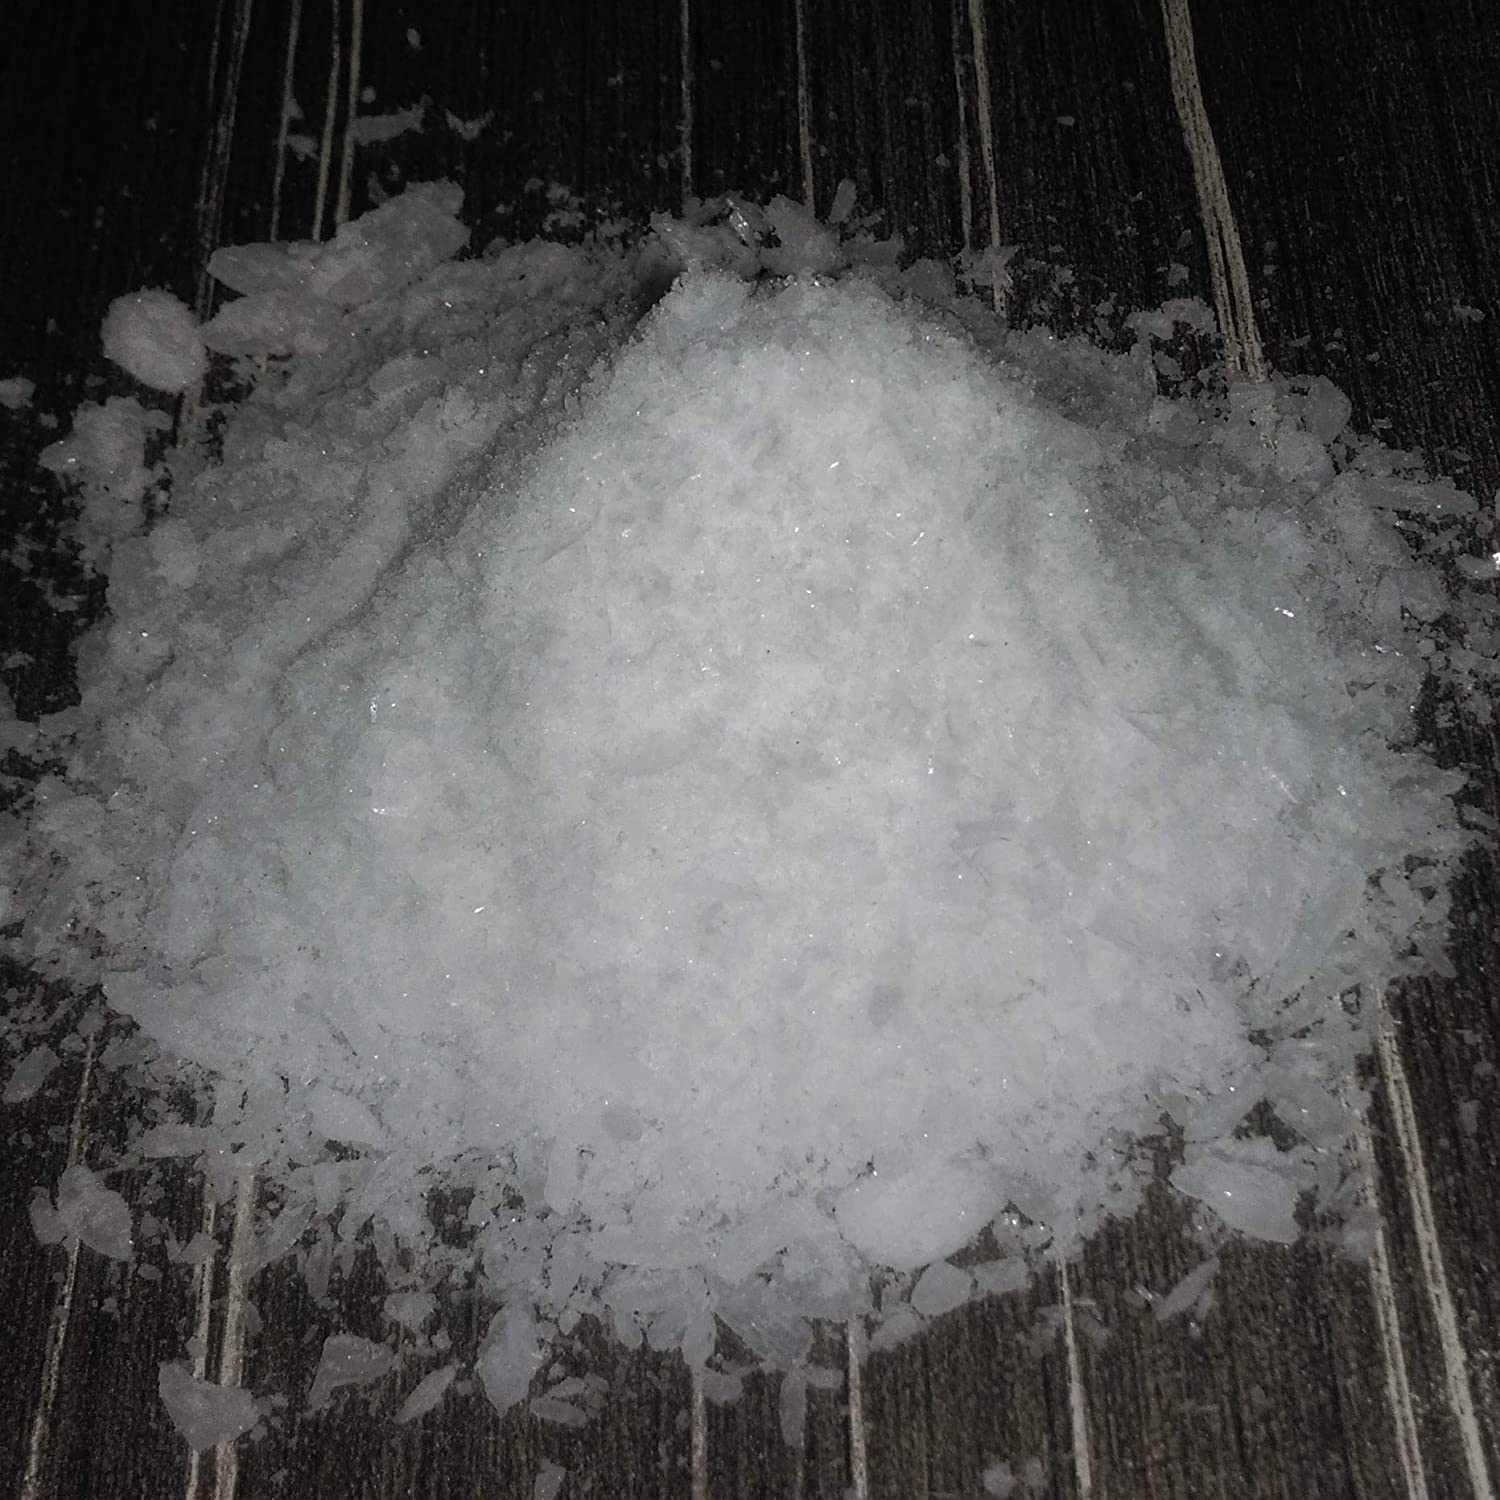 Panchsheel Magnesium Nitrate Fertilizer Powder Water Soluble White Crystalline Free Flow Flacks (300 gms)